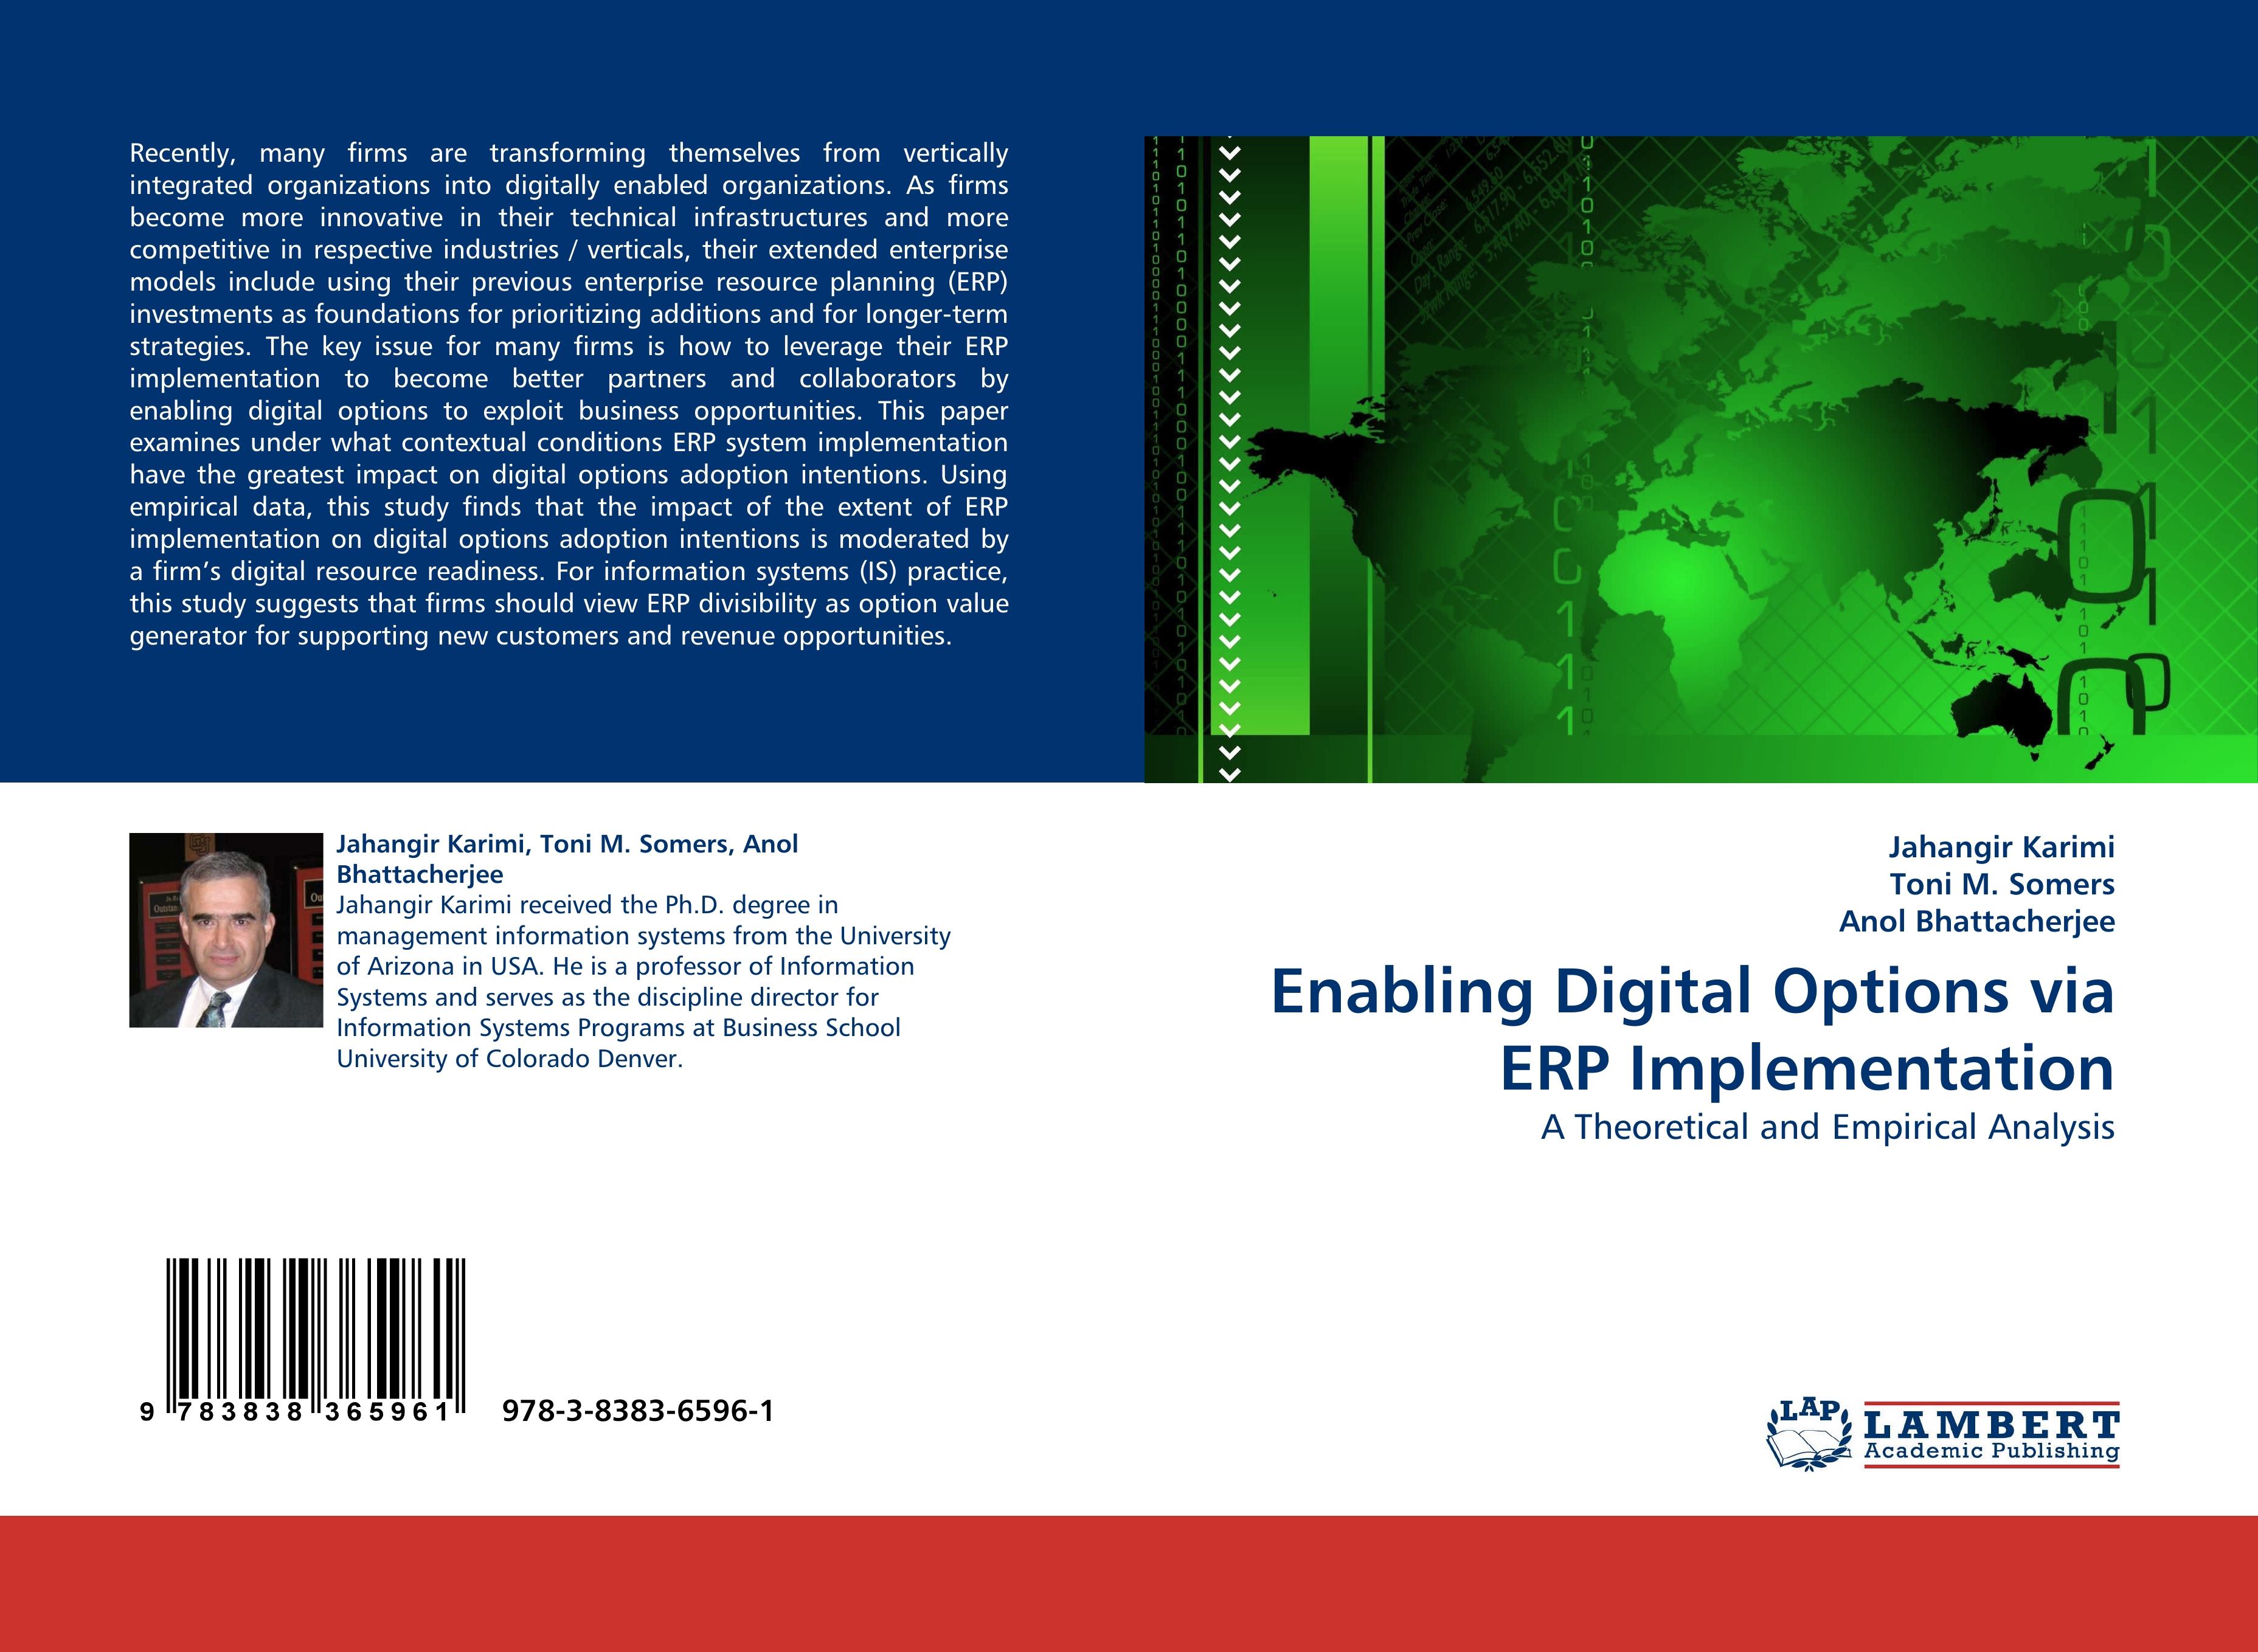 Enabling Digital Options via ERP Implementation - Karimi, Jahangir|Somers, Toni M.|Bhattacherjee, Anol